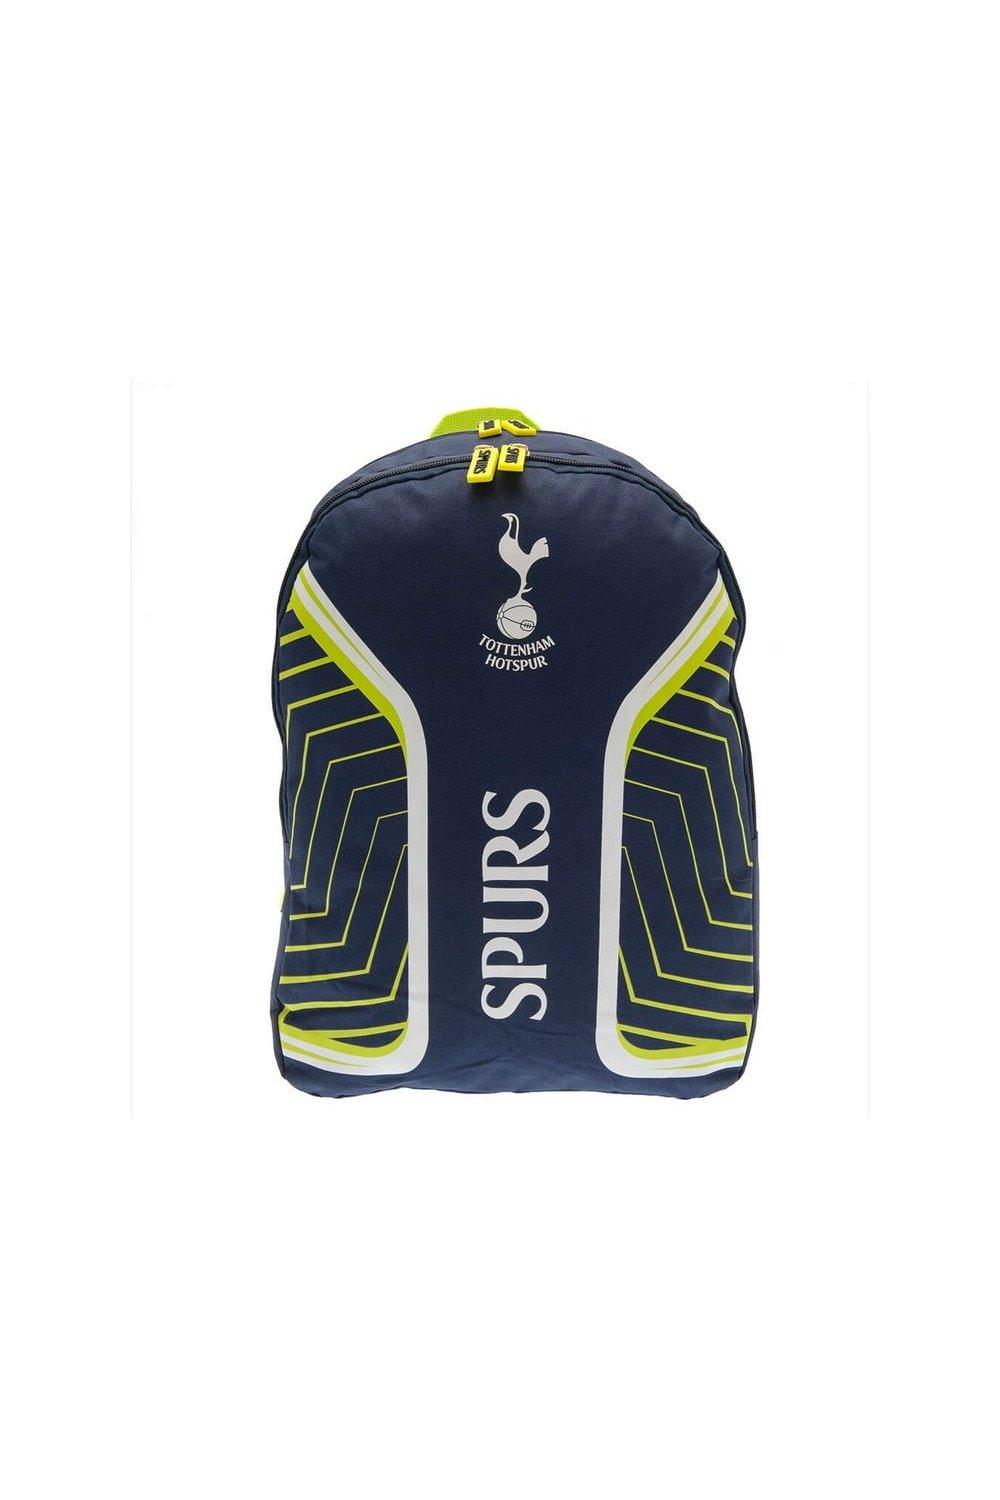 Флэш-рюкзак Tottenham Hotspur FC, темно-синий tottenham hotspur 3315526 s белый